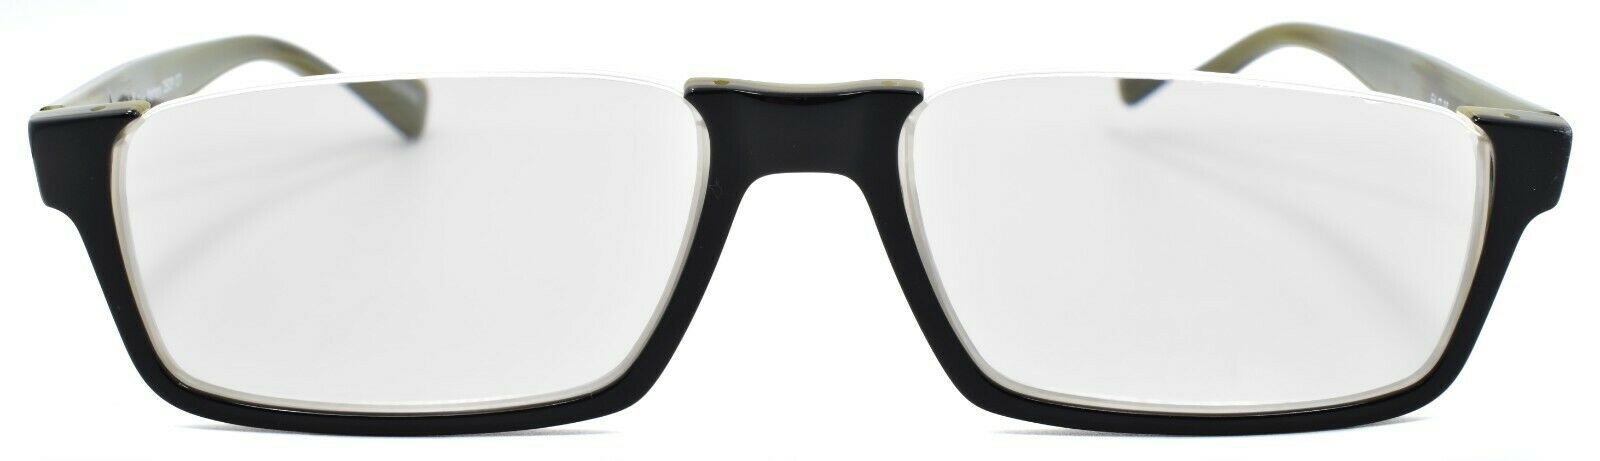 2-Eyebobs Size Matters 2509 07 Men's Reading Glasses Semi-Rimless Black Horn +2.50-842754109680-IKSpecs